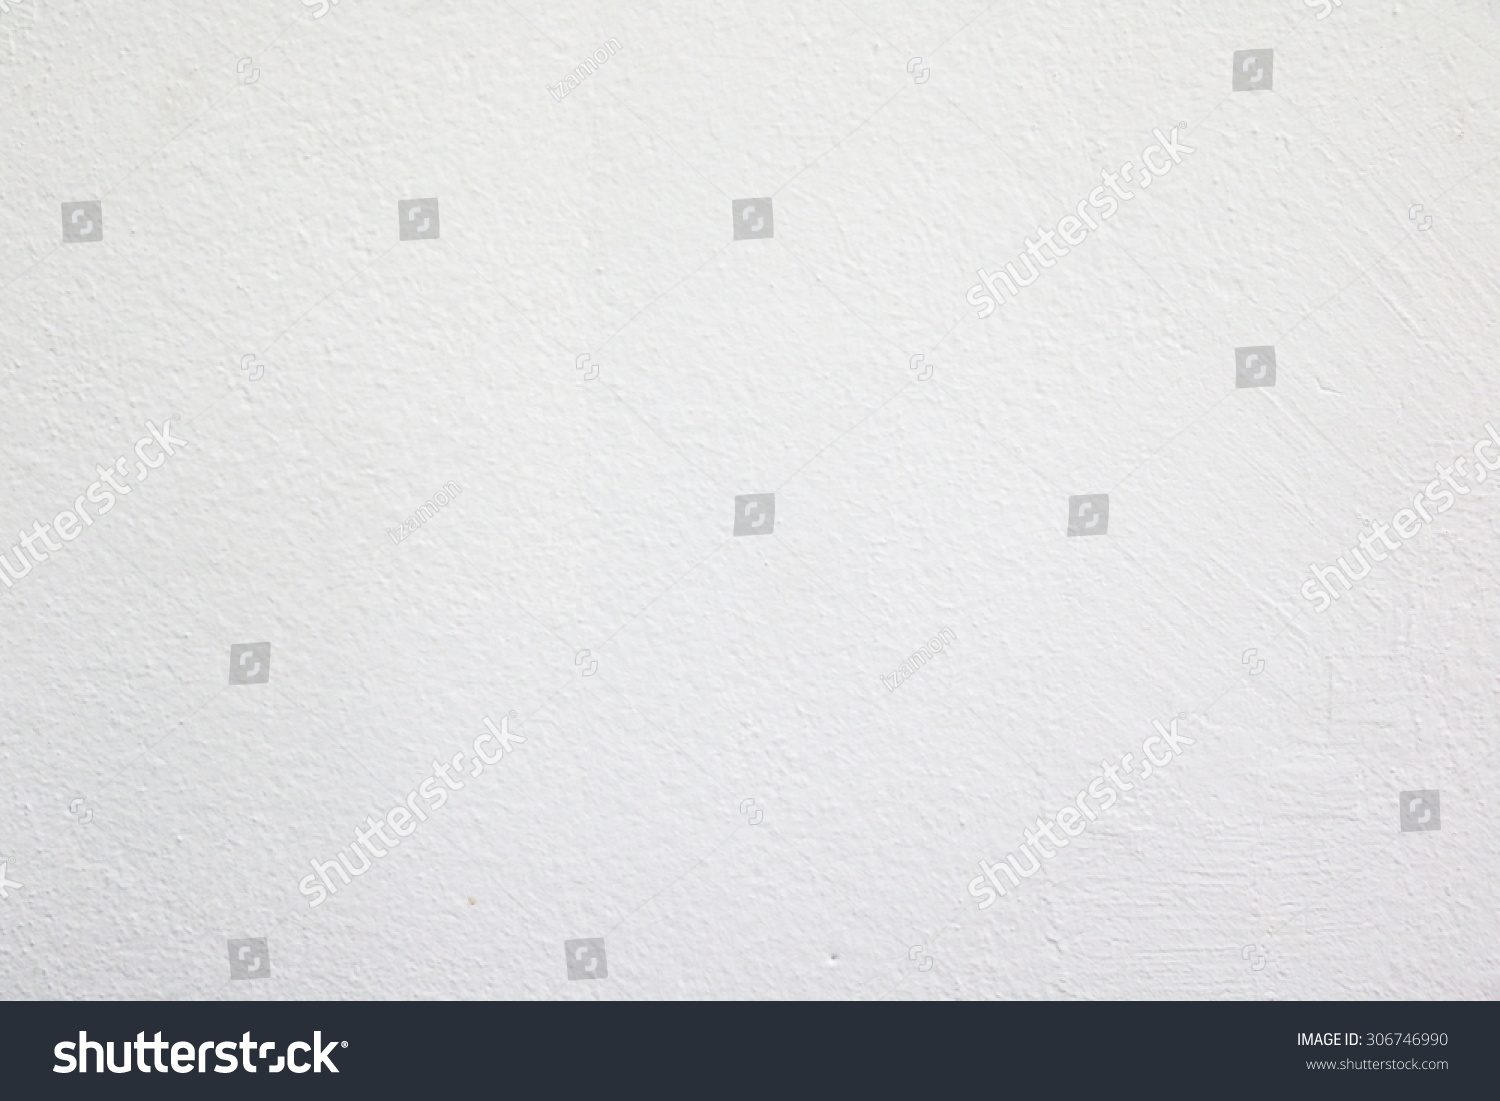 White Cement Wall Stock Photo 306746990 - Shutterstock